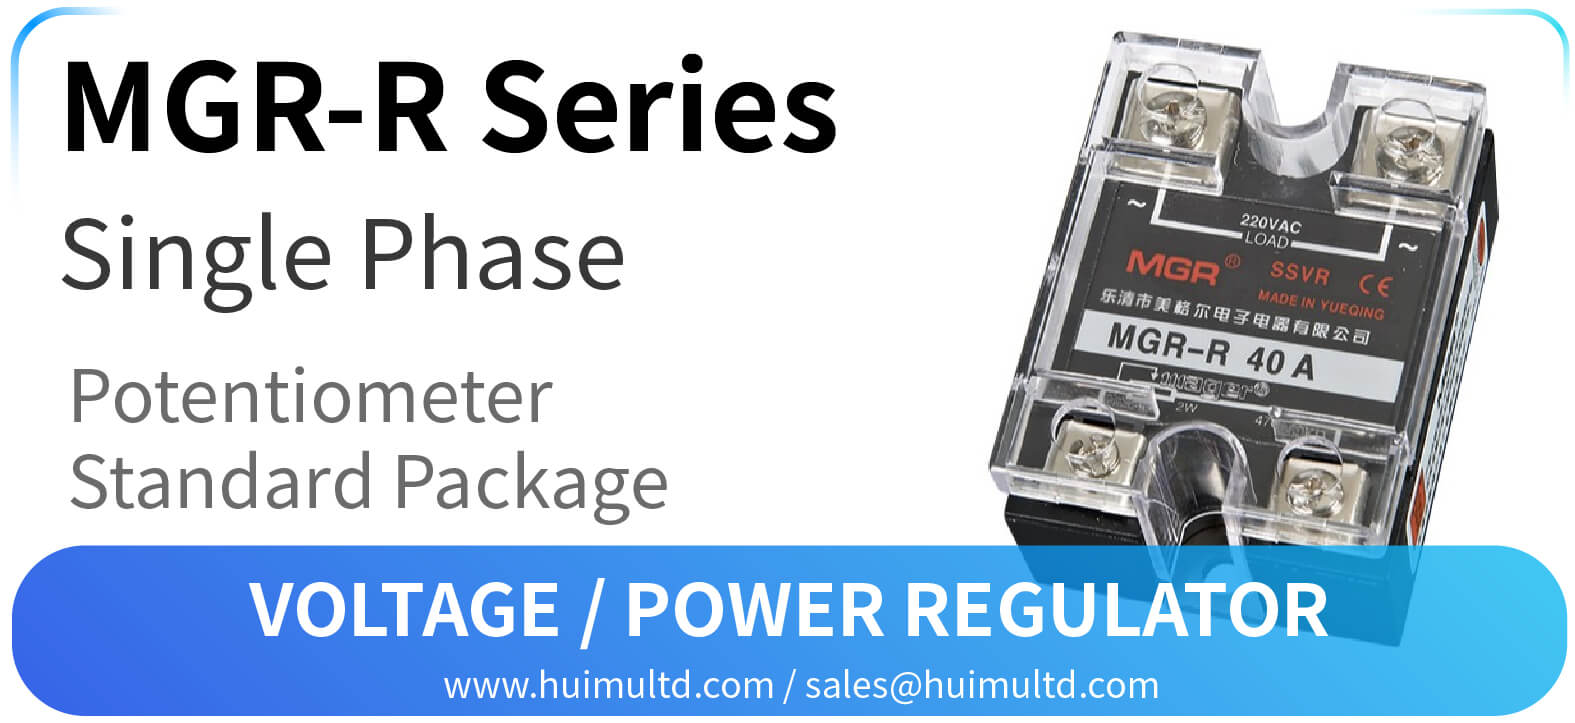 MGR-R Series Voltage Power Regulator